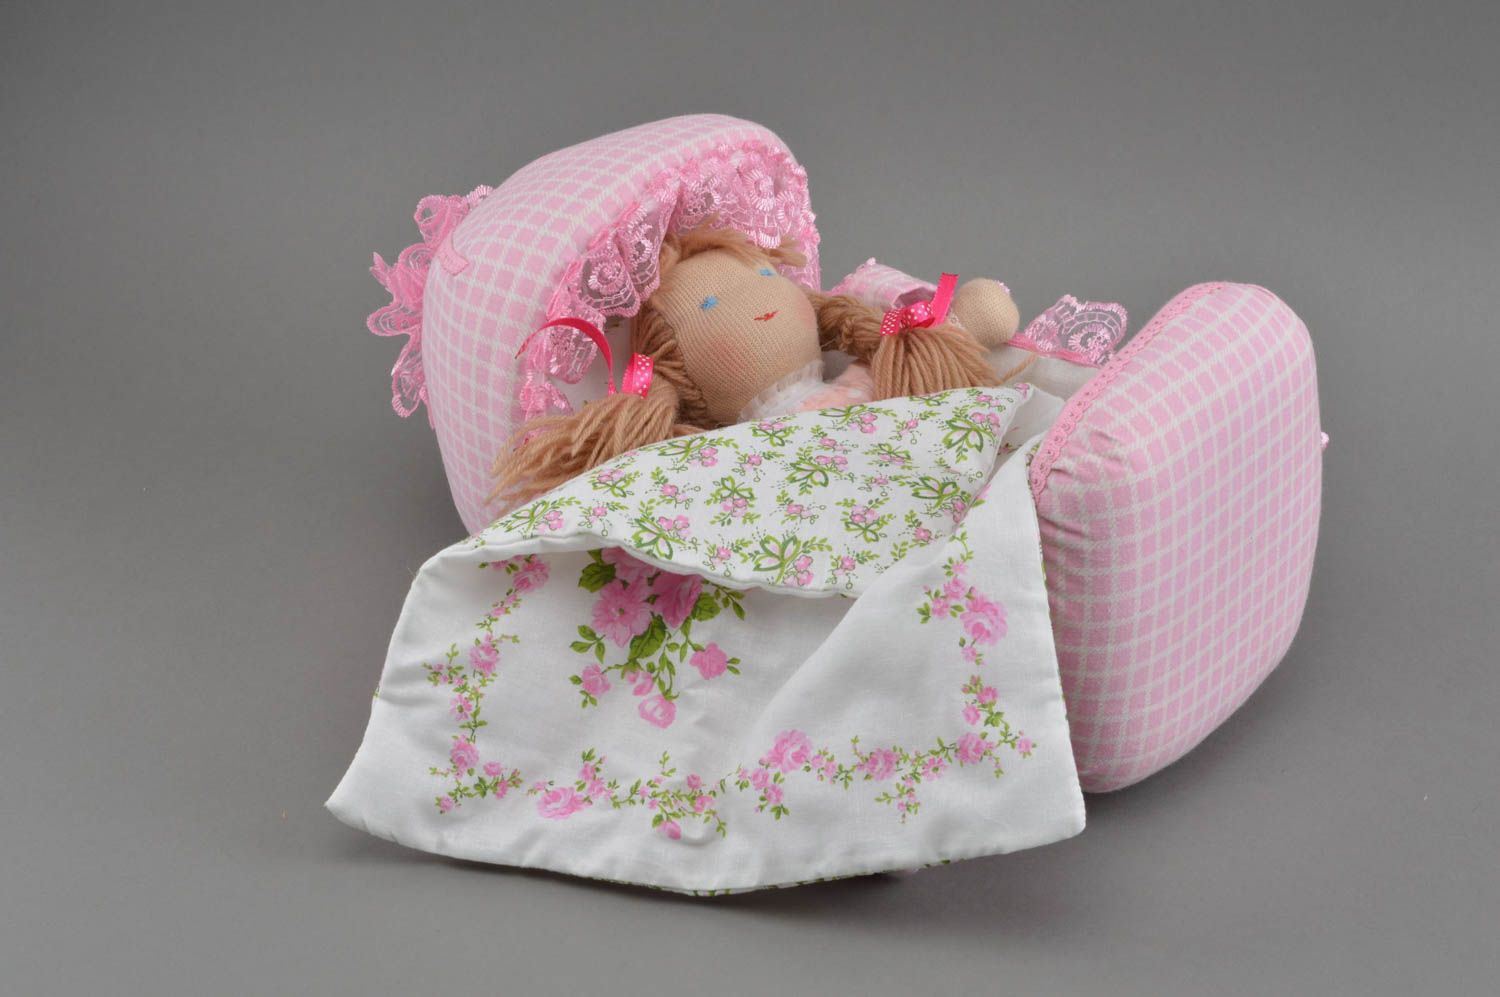 Cuna para muñeca hecha a mano de color rosado juguete para niñas regalo original foto 1